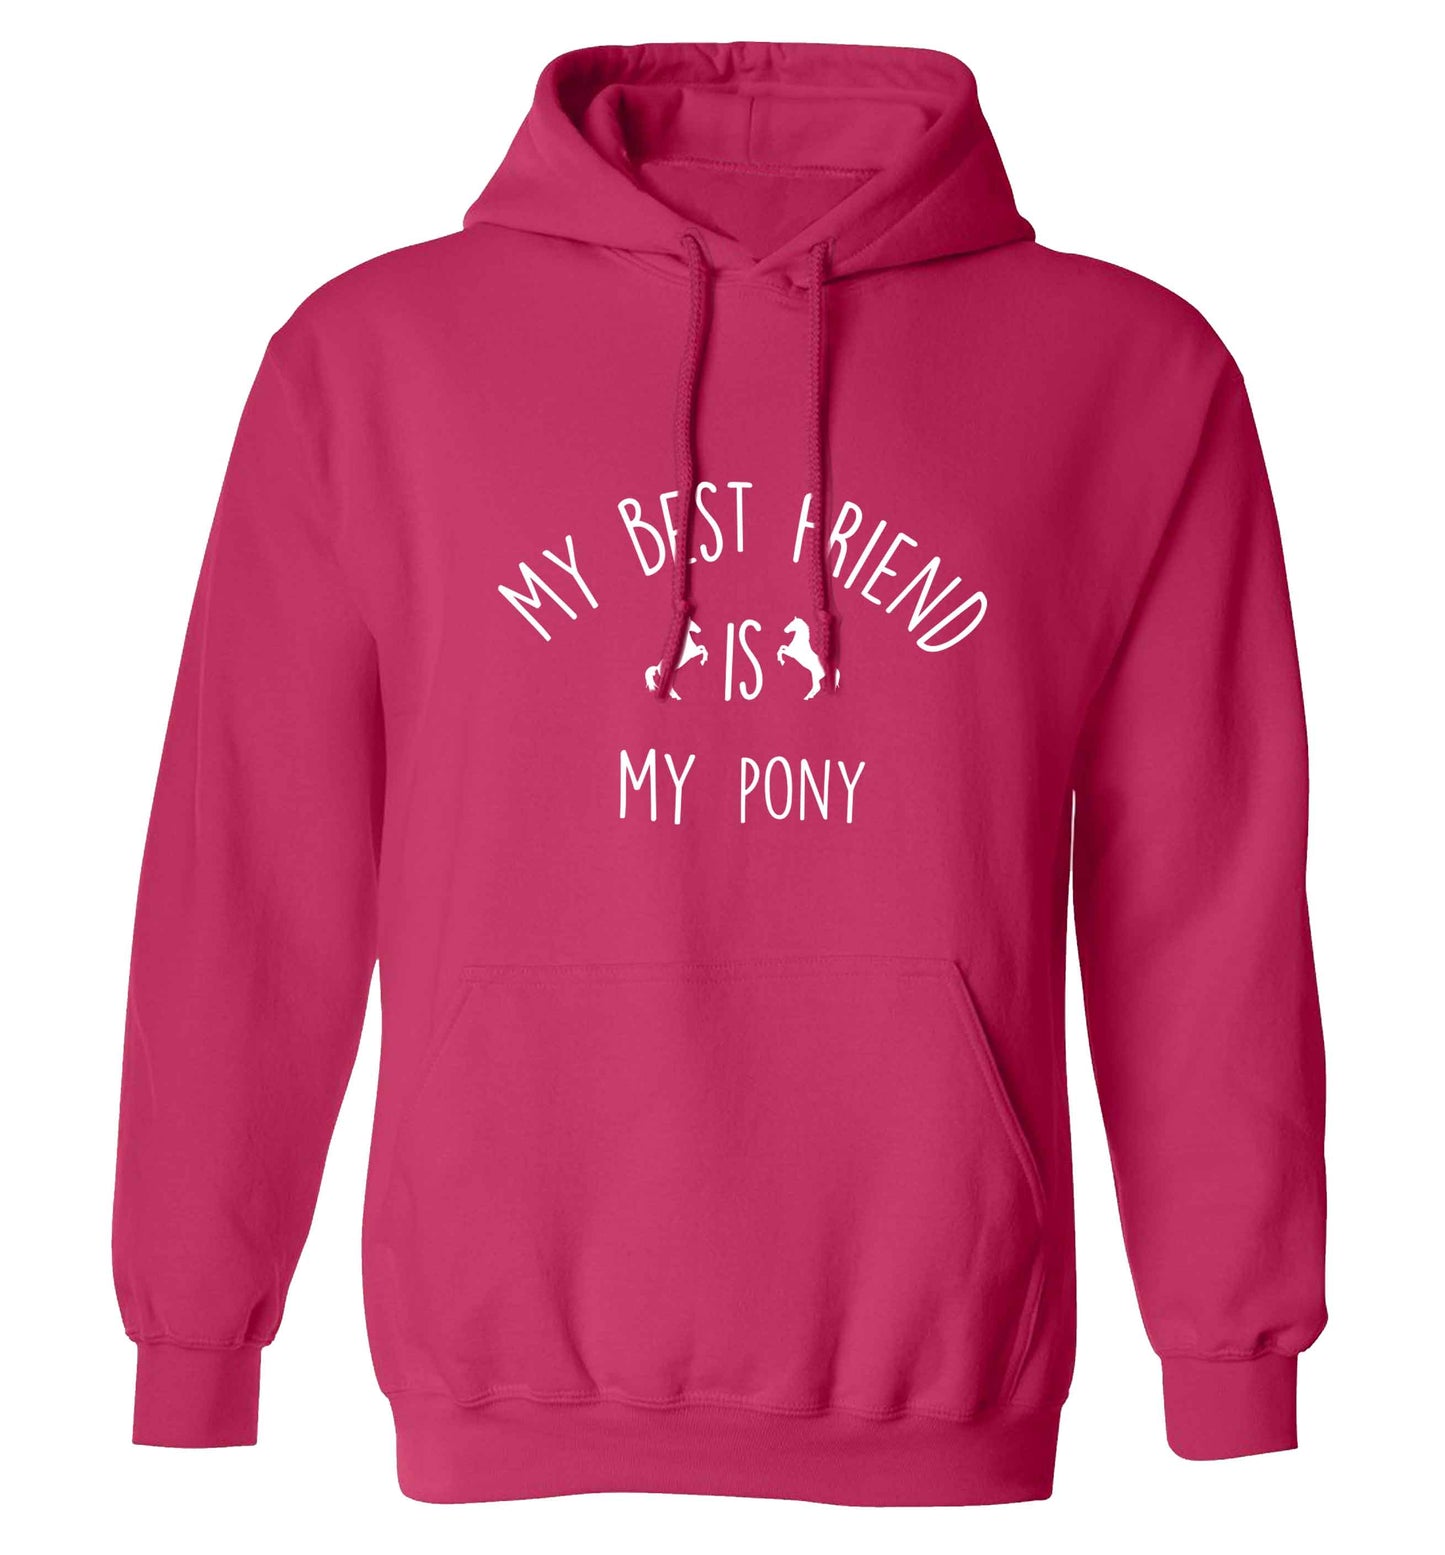 My best friend is my pony adults unisex pink hoodie 2XL